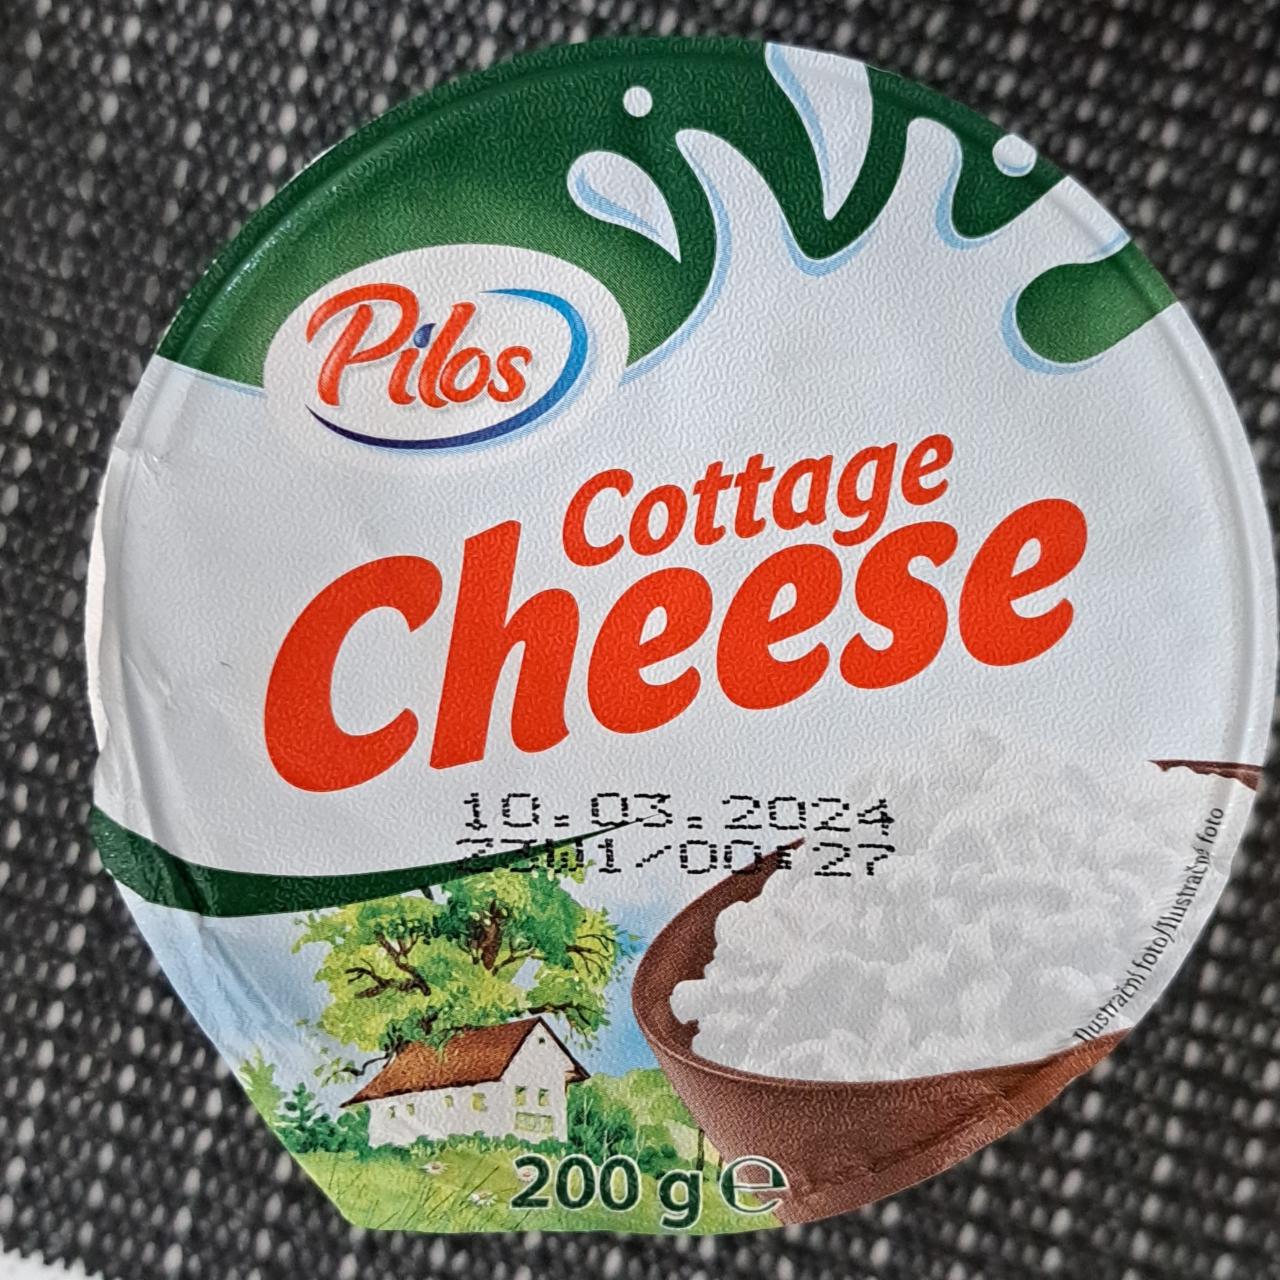 Фото - Сир кисломолочний Cottage Cheese Pilos